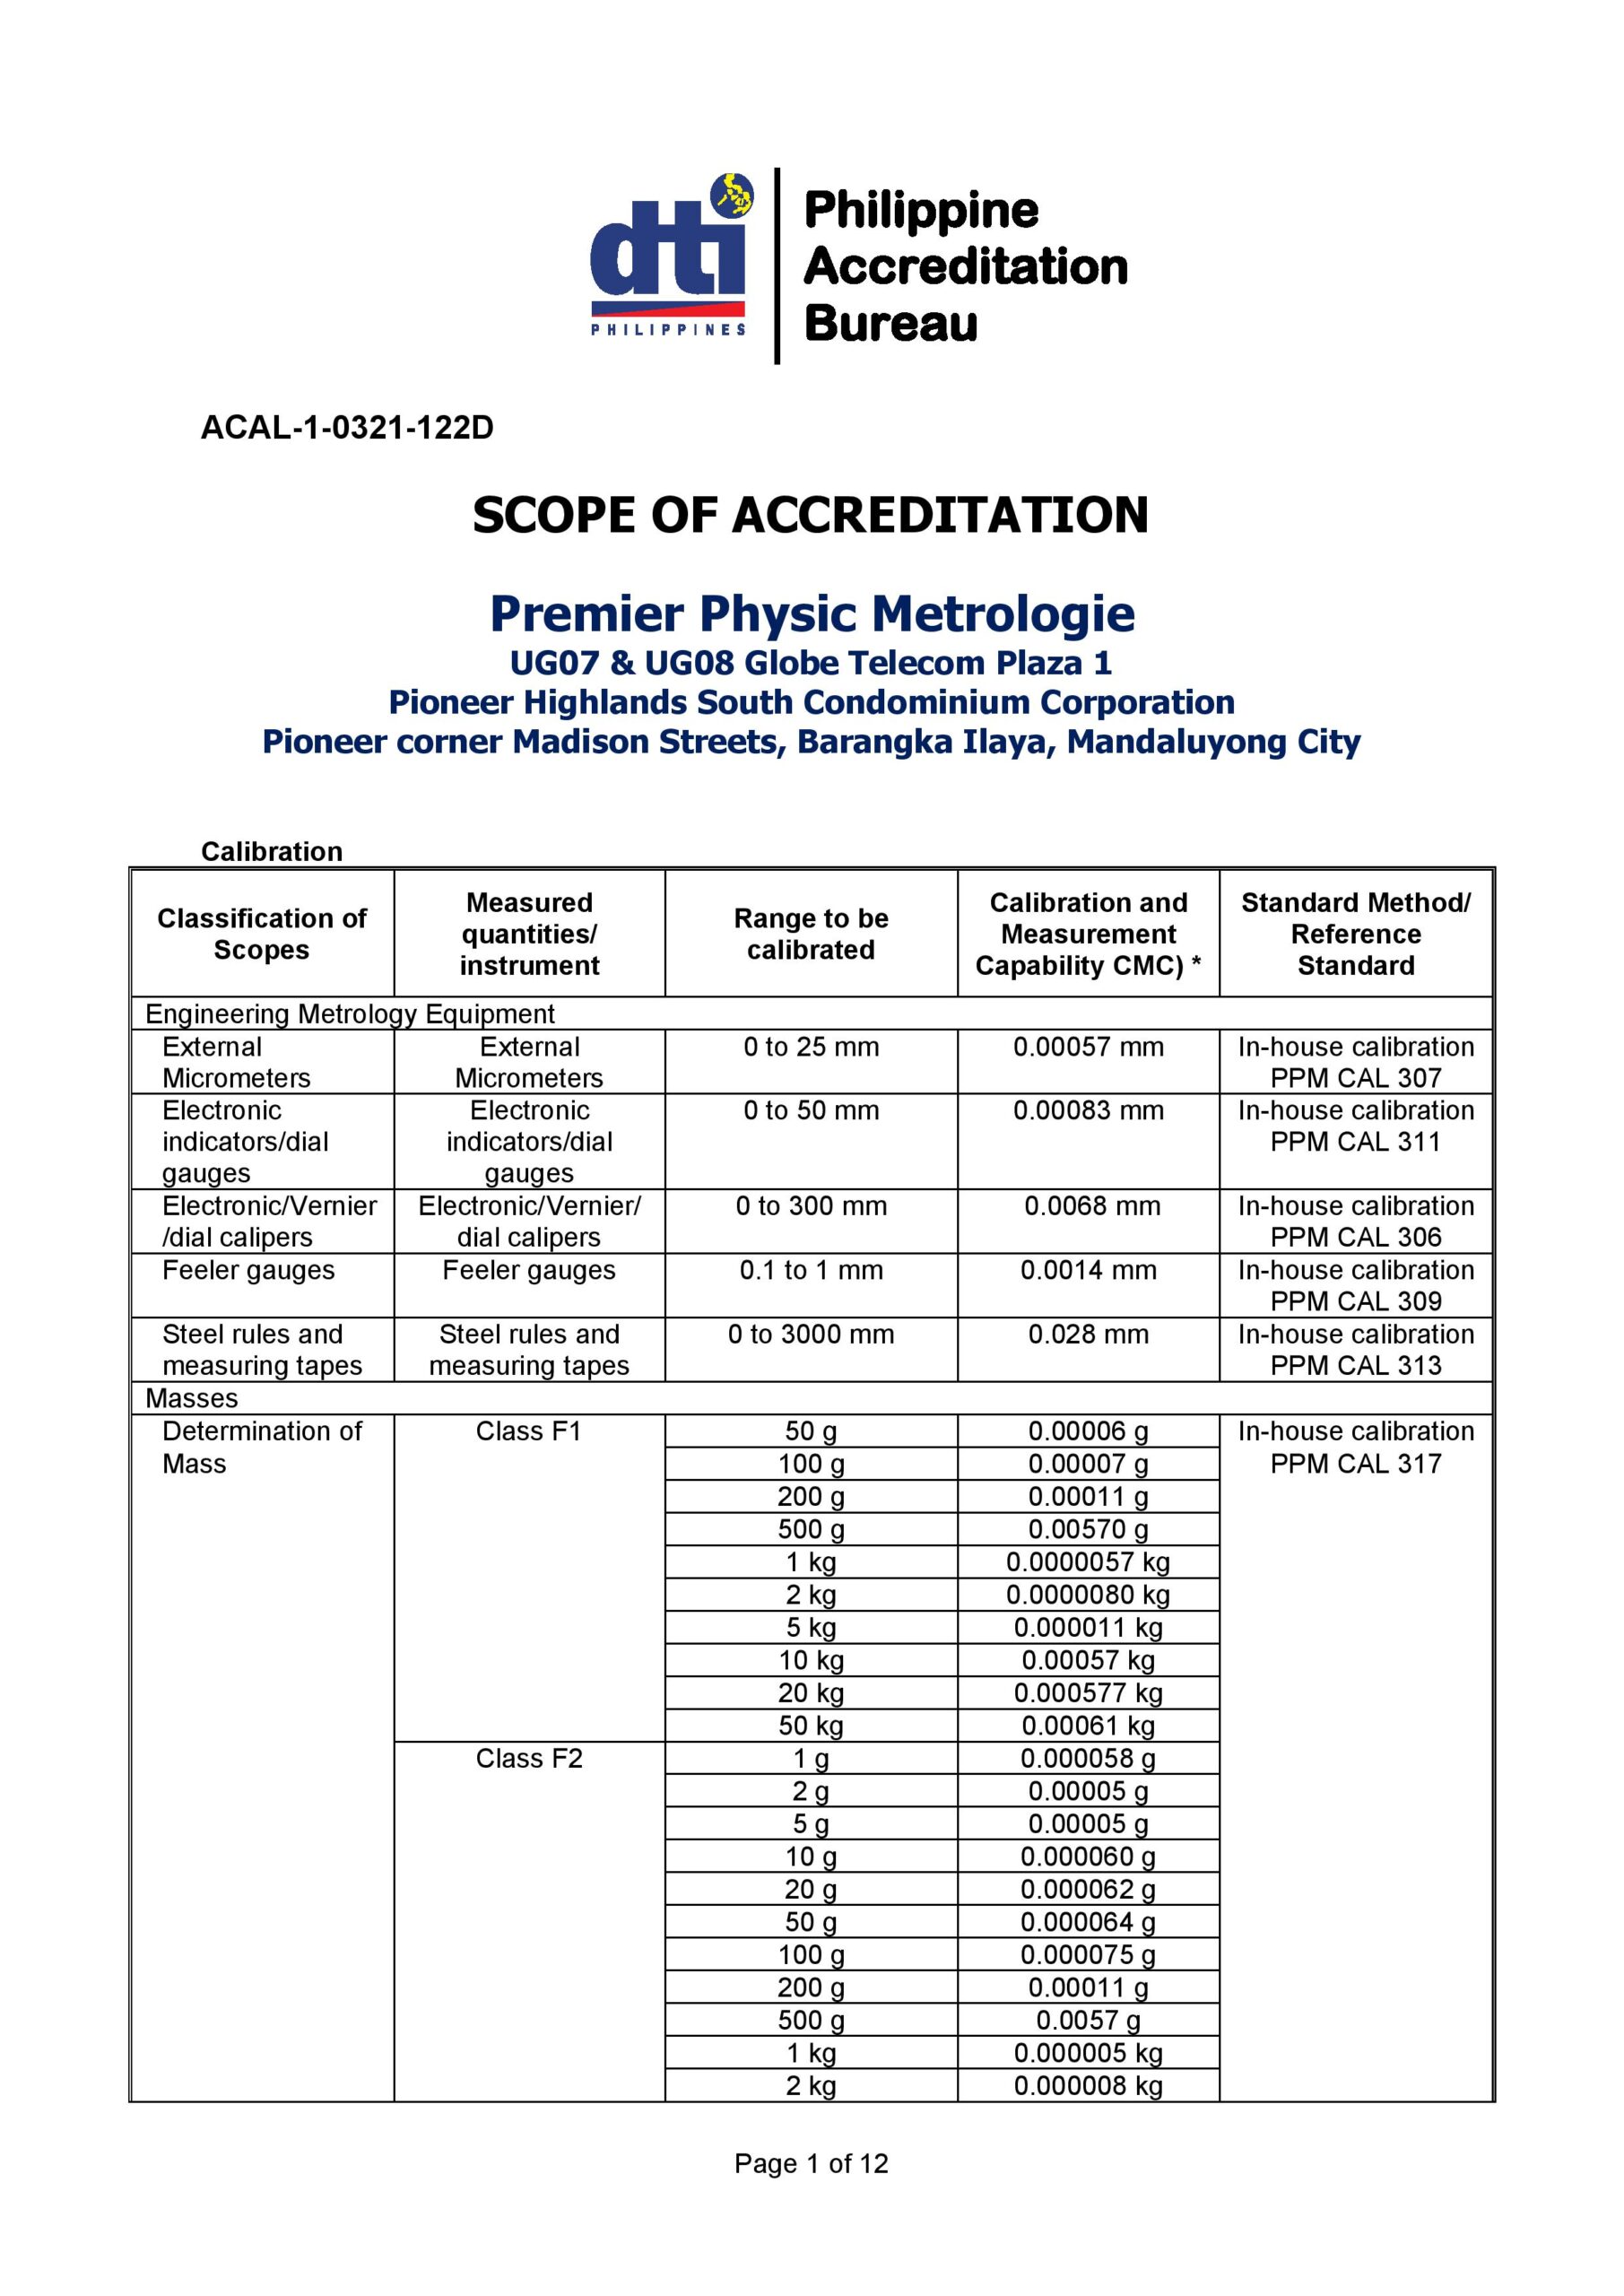 Premier Physic Metrologie - Scope of Accreditation 1